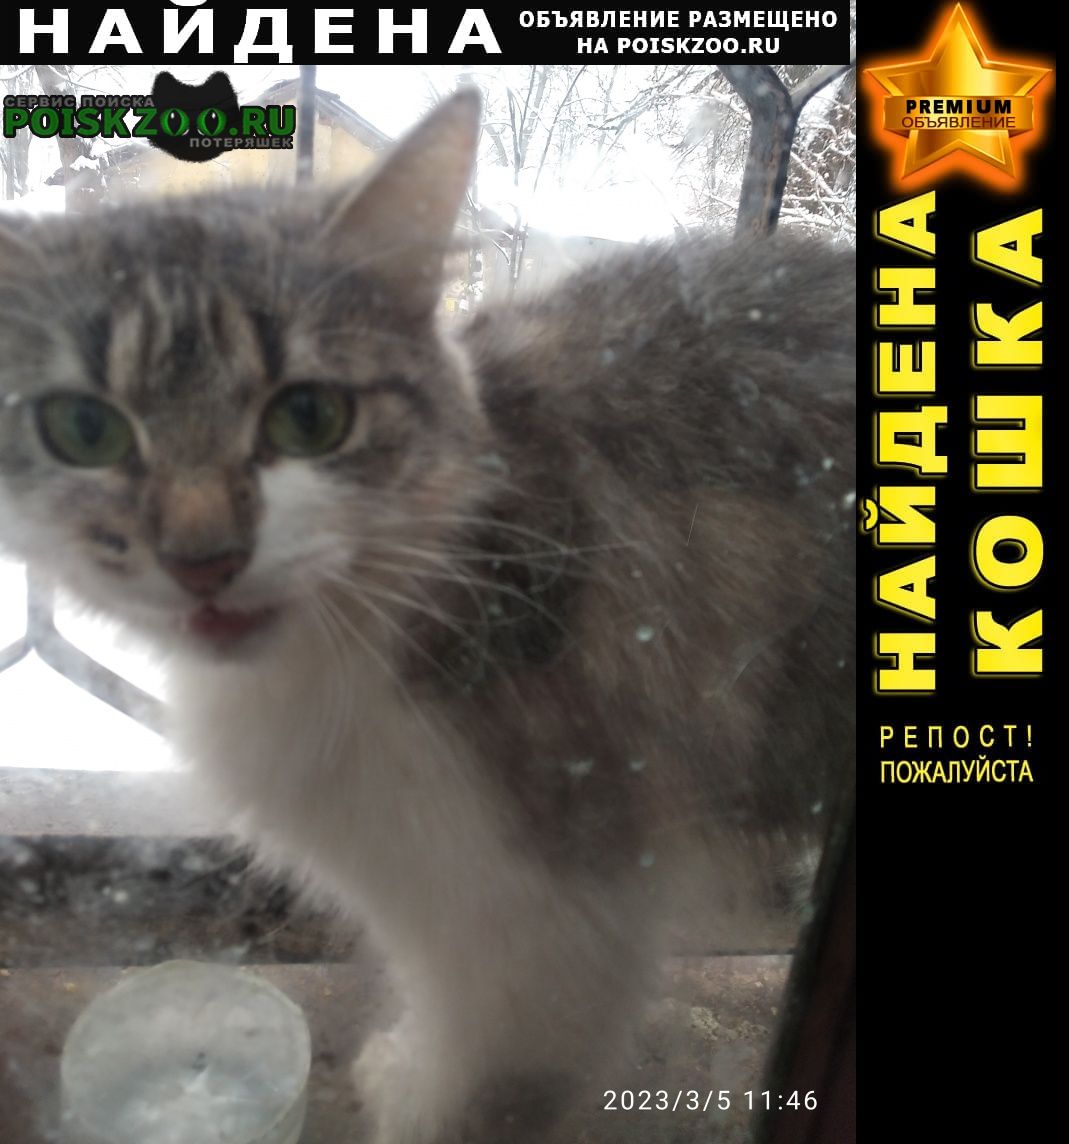 Найдена кошка в районе ул. бекетова, дома 5 Нижний Новгород